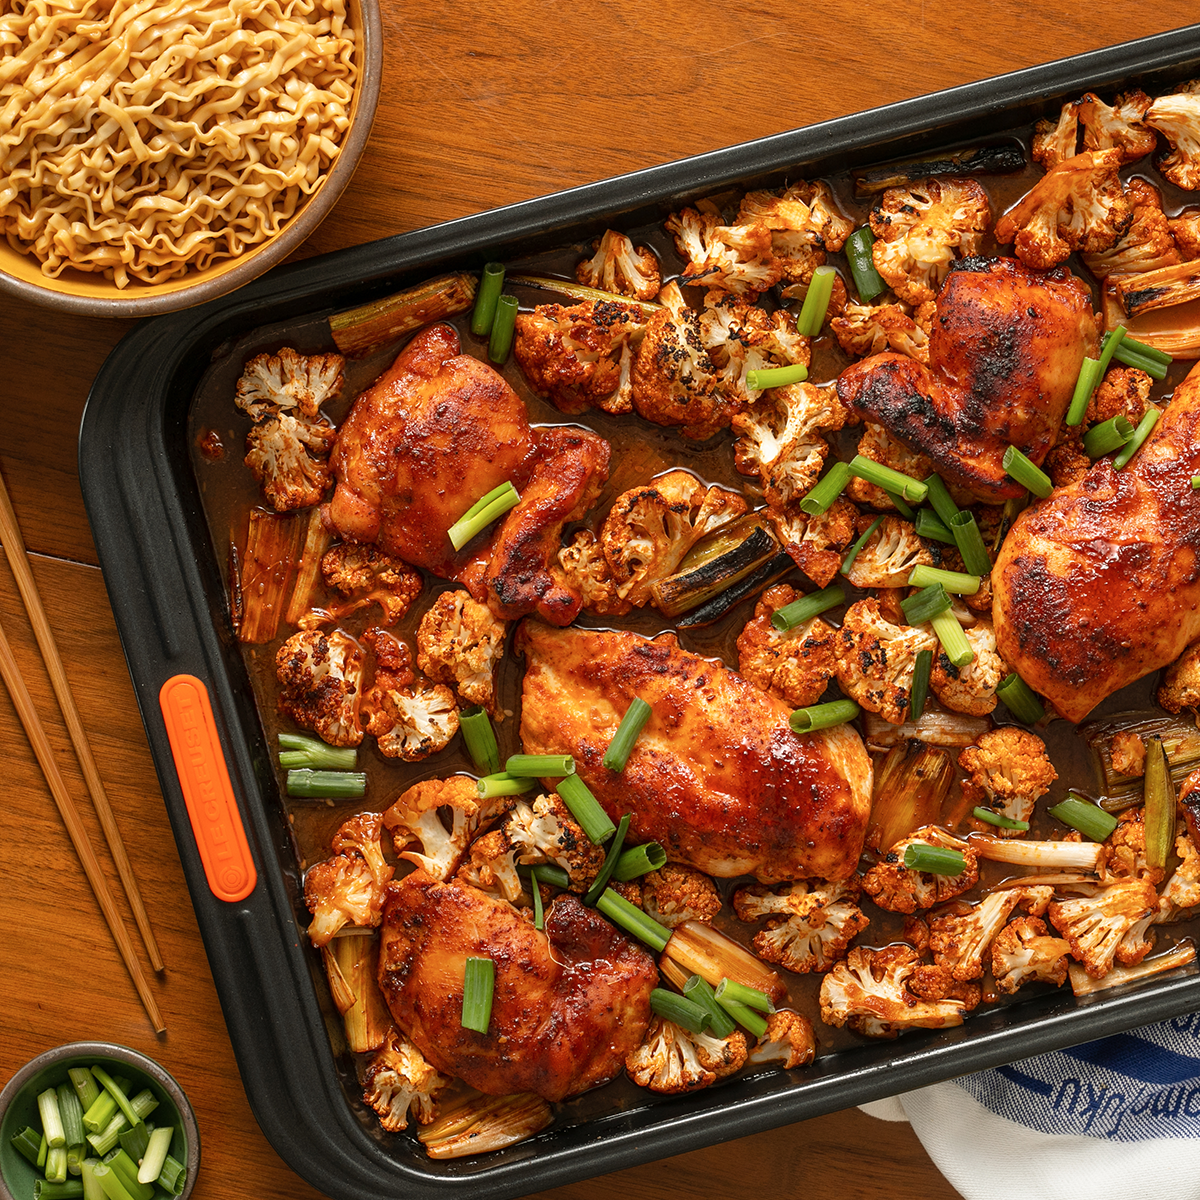 Recipe Pack: Sheet Pan Spicy Chicken & Cauliflower Noodle Bowls